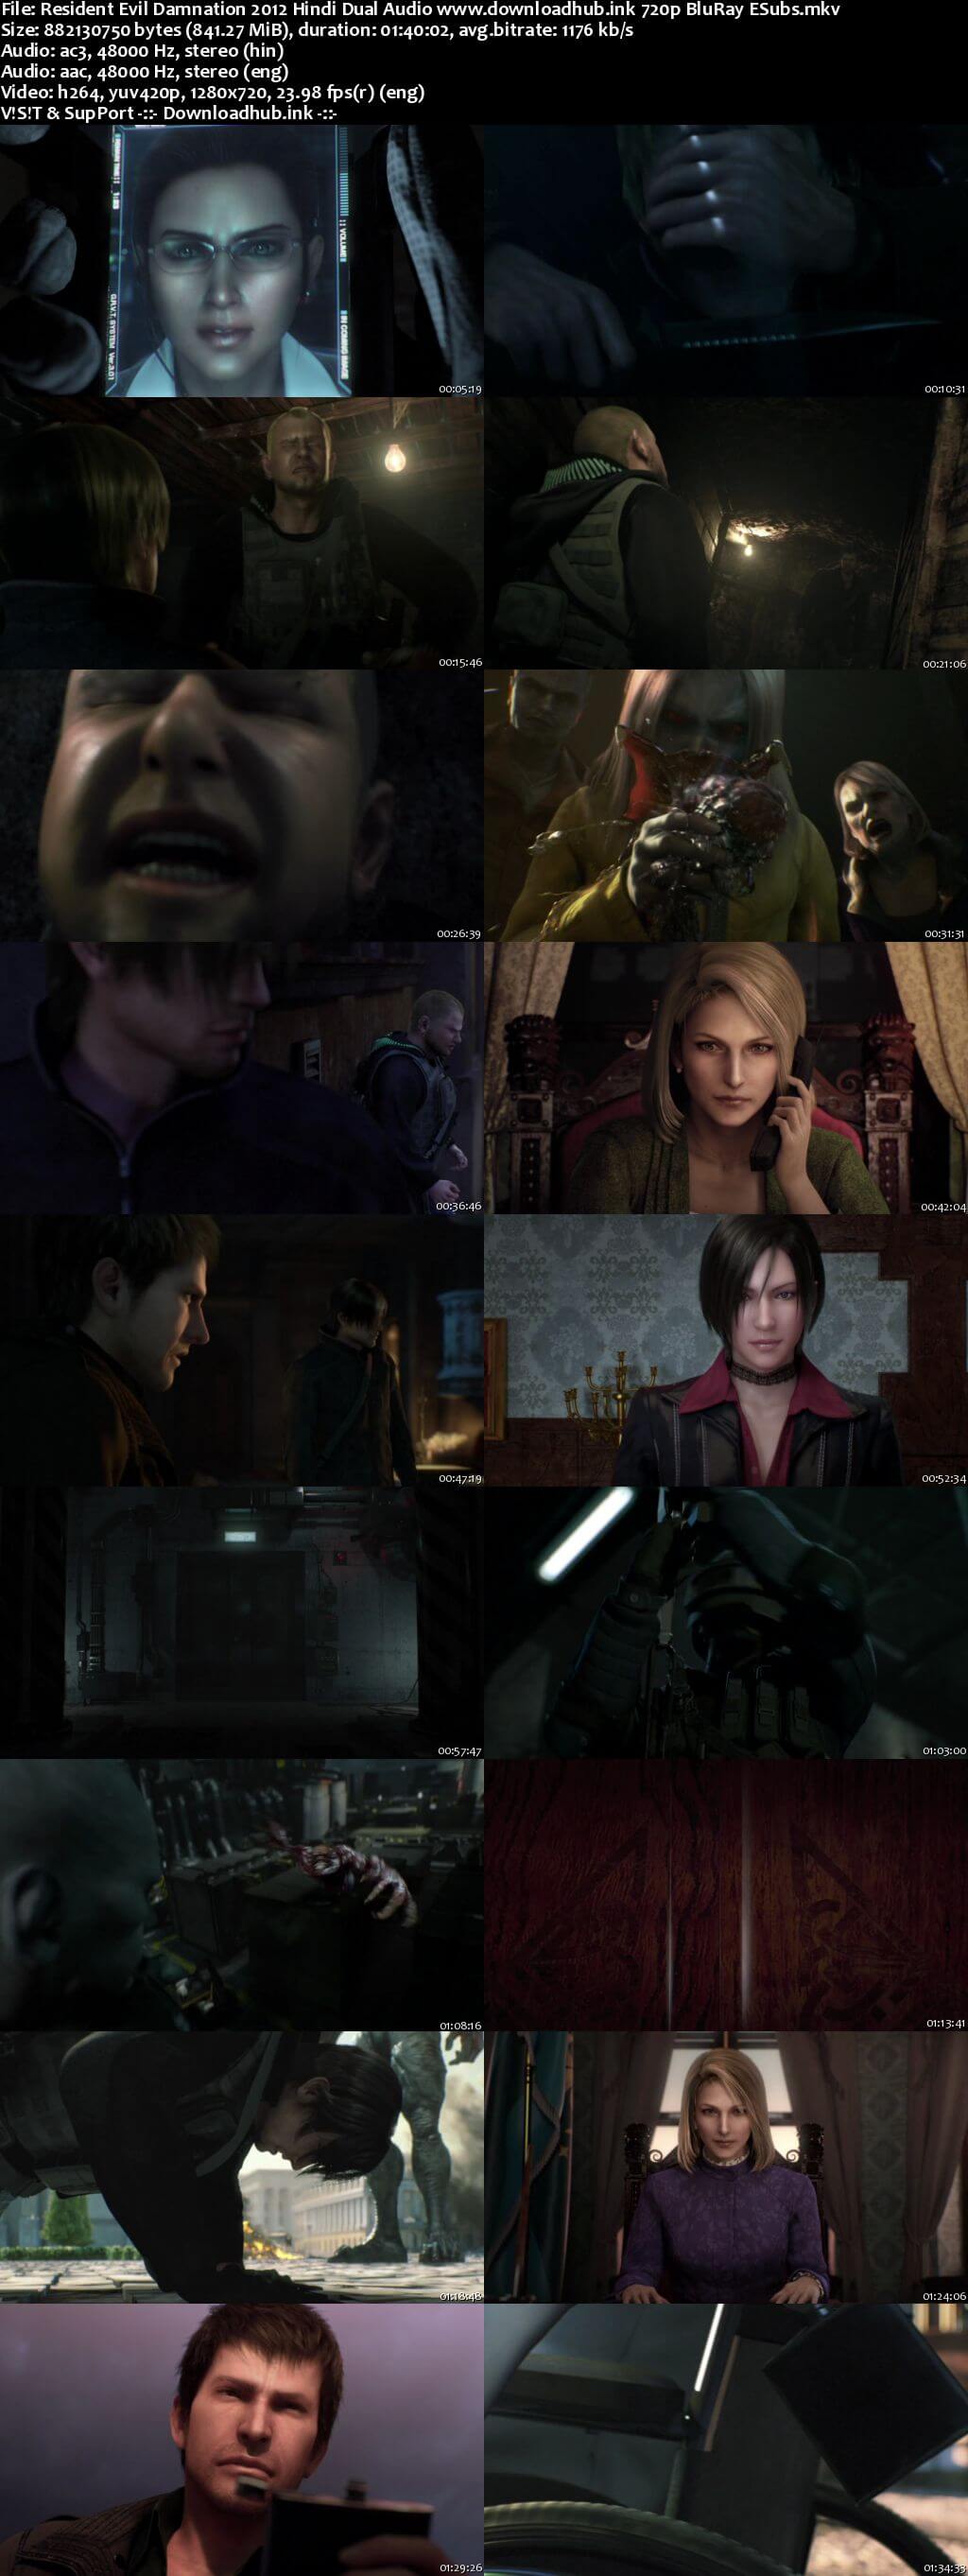 Resident Evil Damnation 2012 Hindi Dual Audio 720p BluRay ESubs